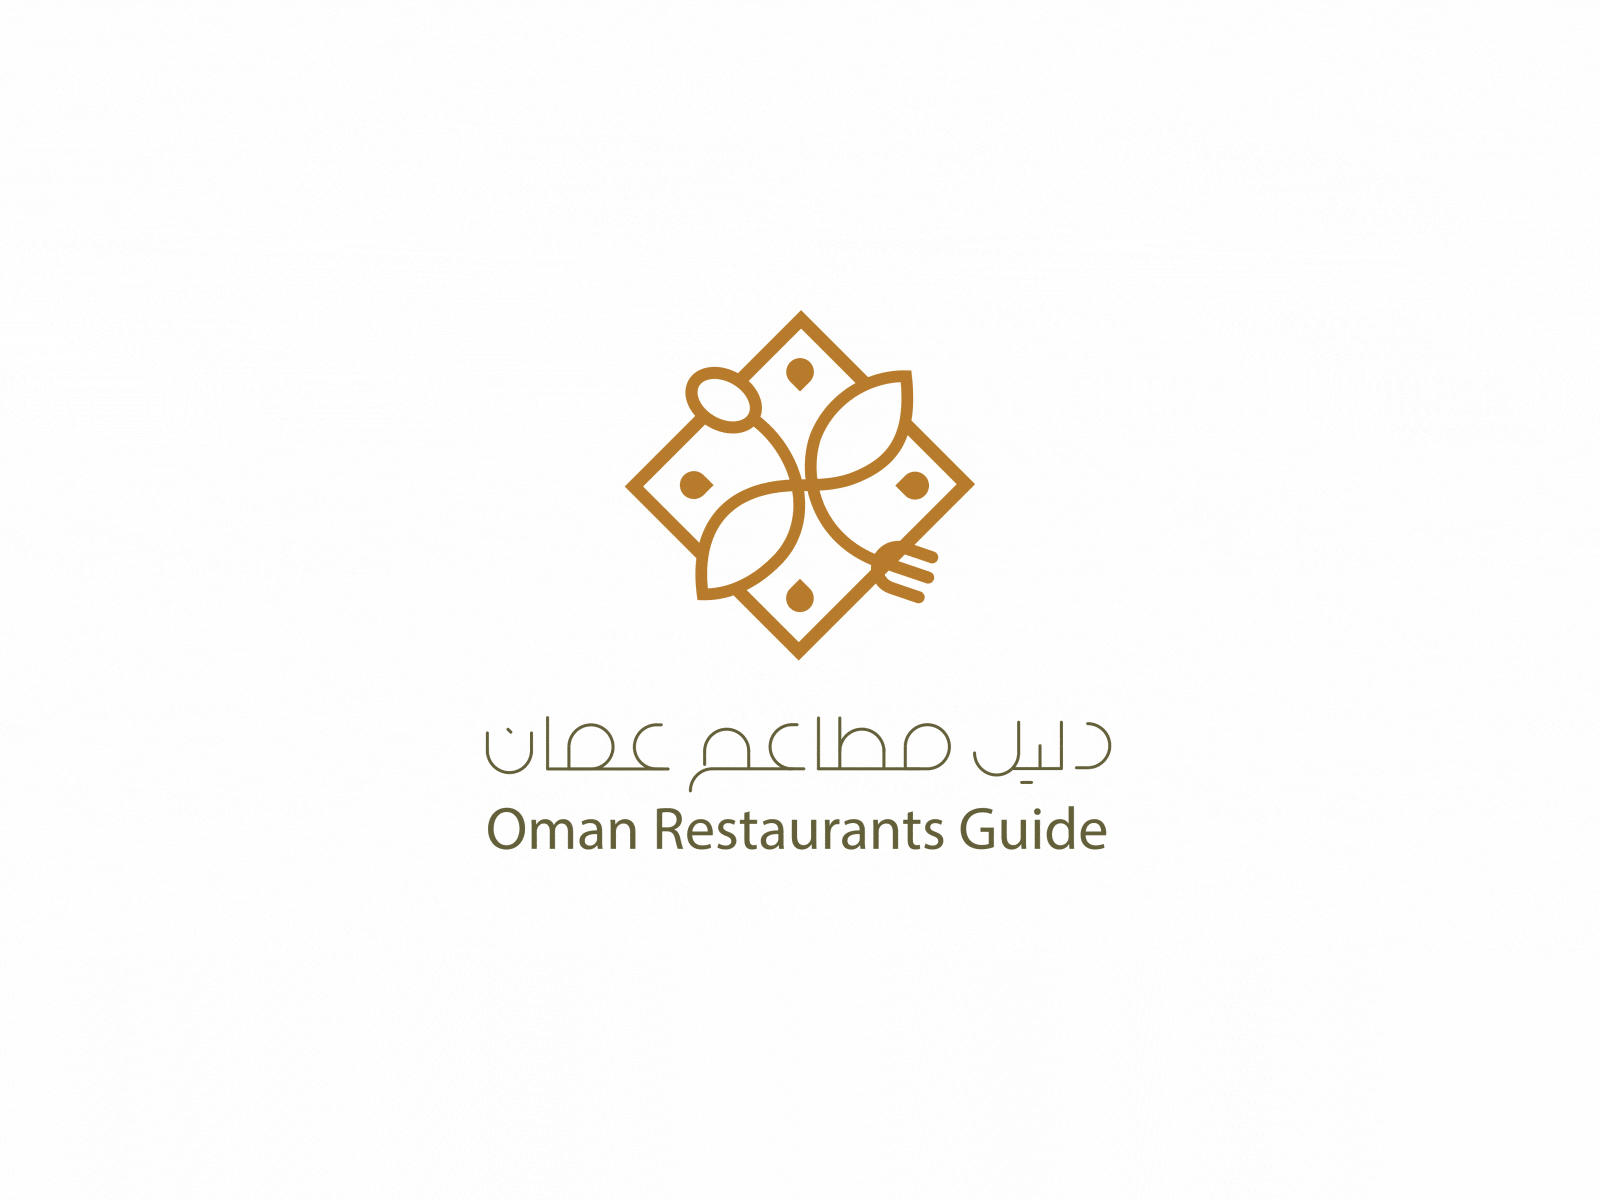 Oman restaurant guide -  logo animation